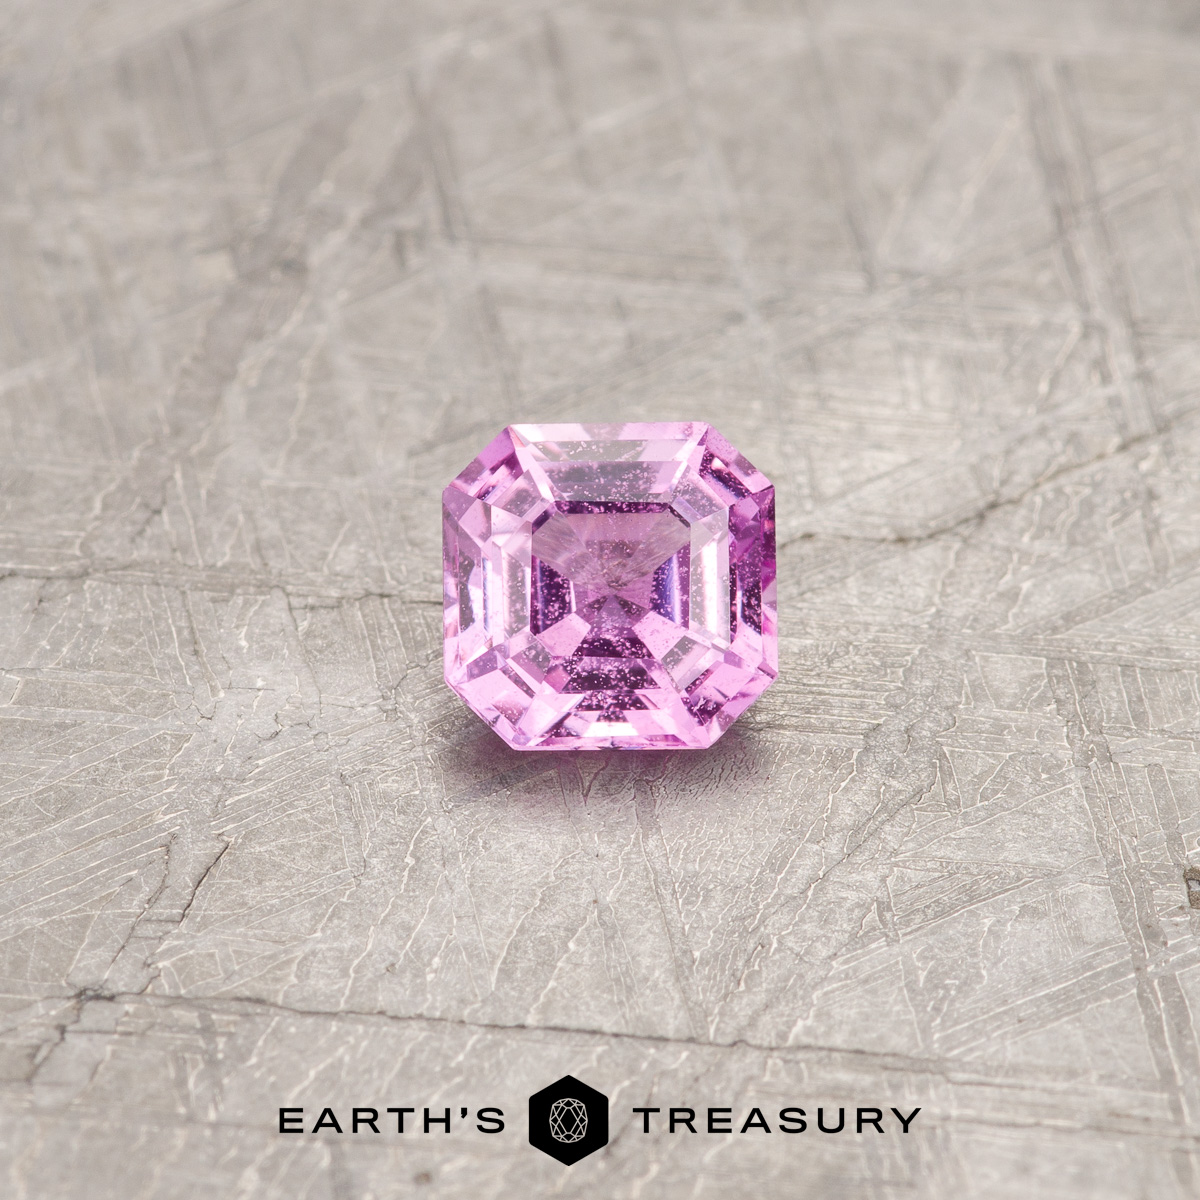 A hot pink sapphire in a classic asscher-style square design